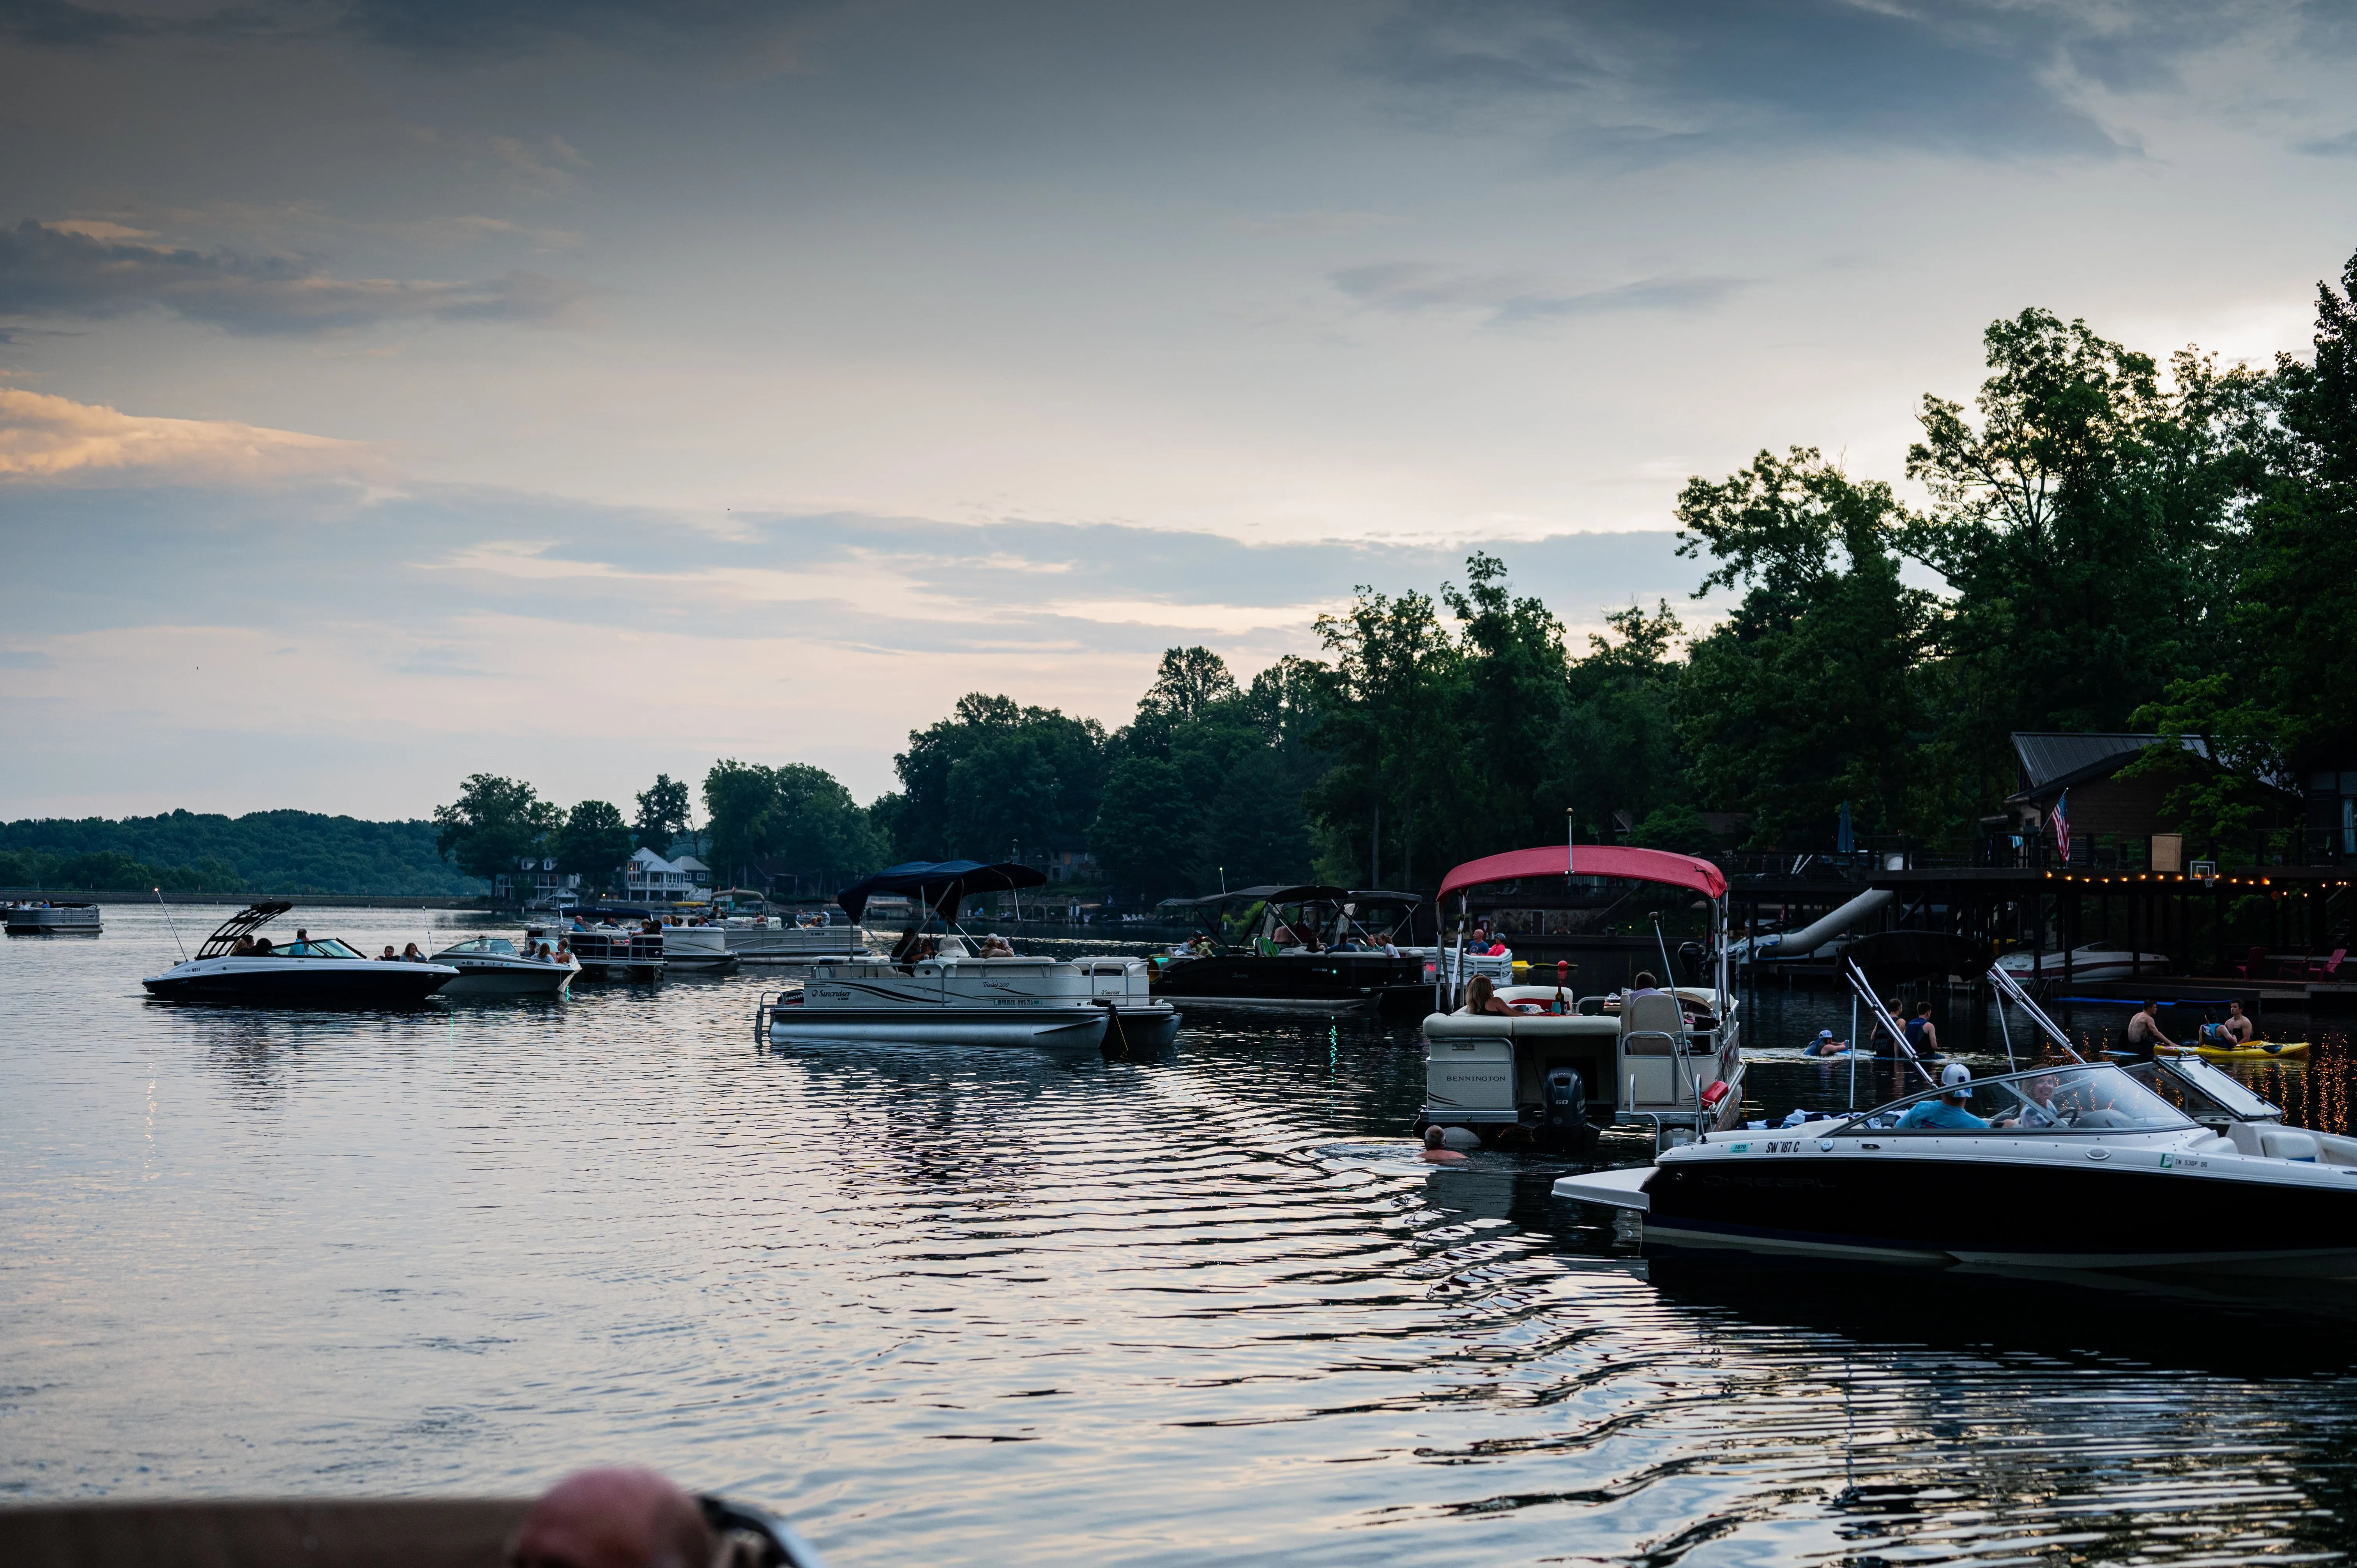 Serene lakeside with docked boats under a dusky sky.